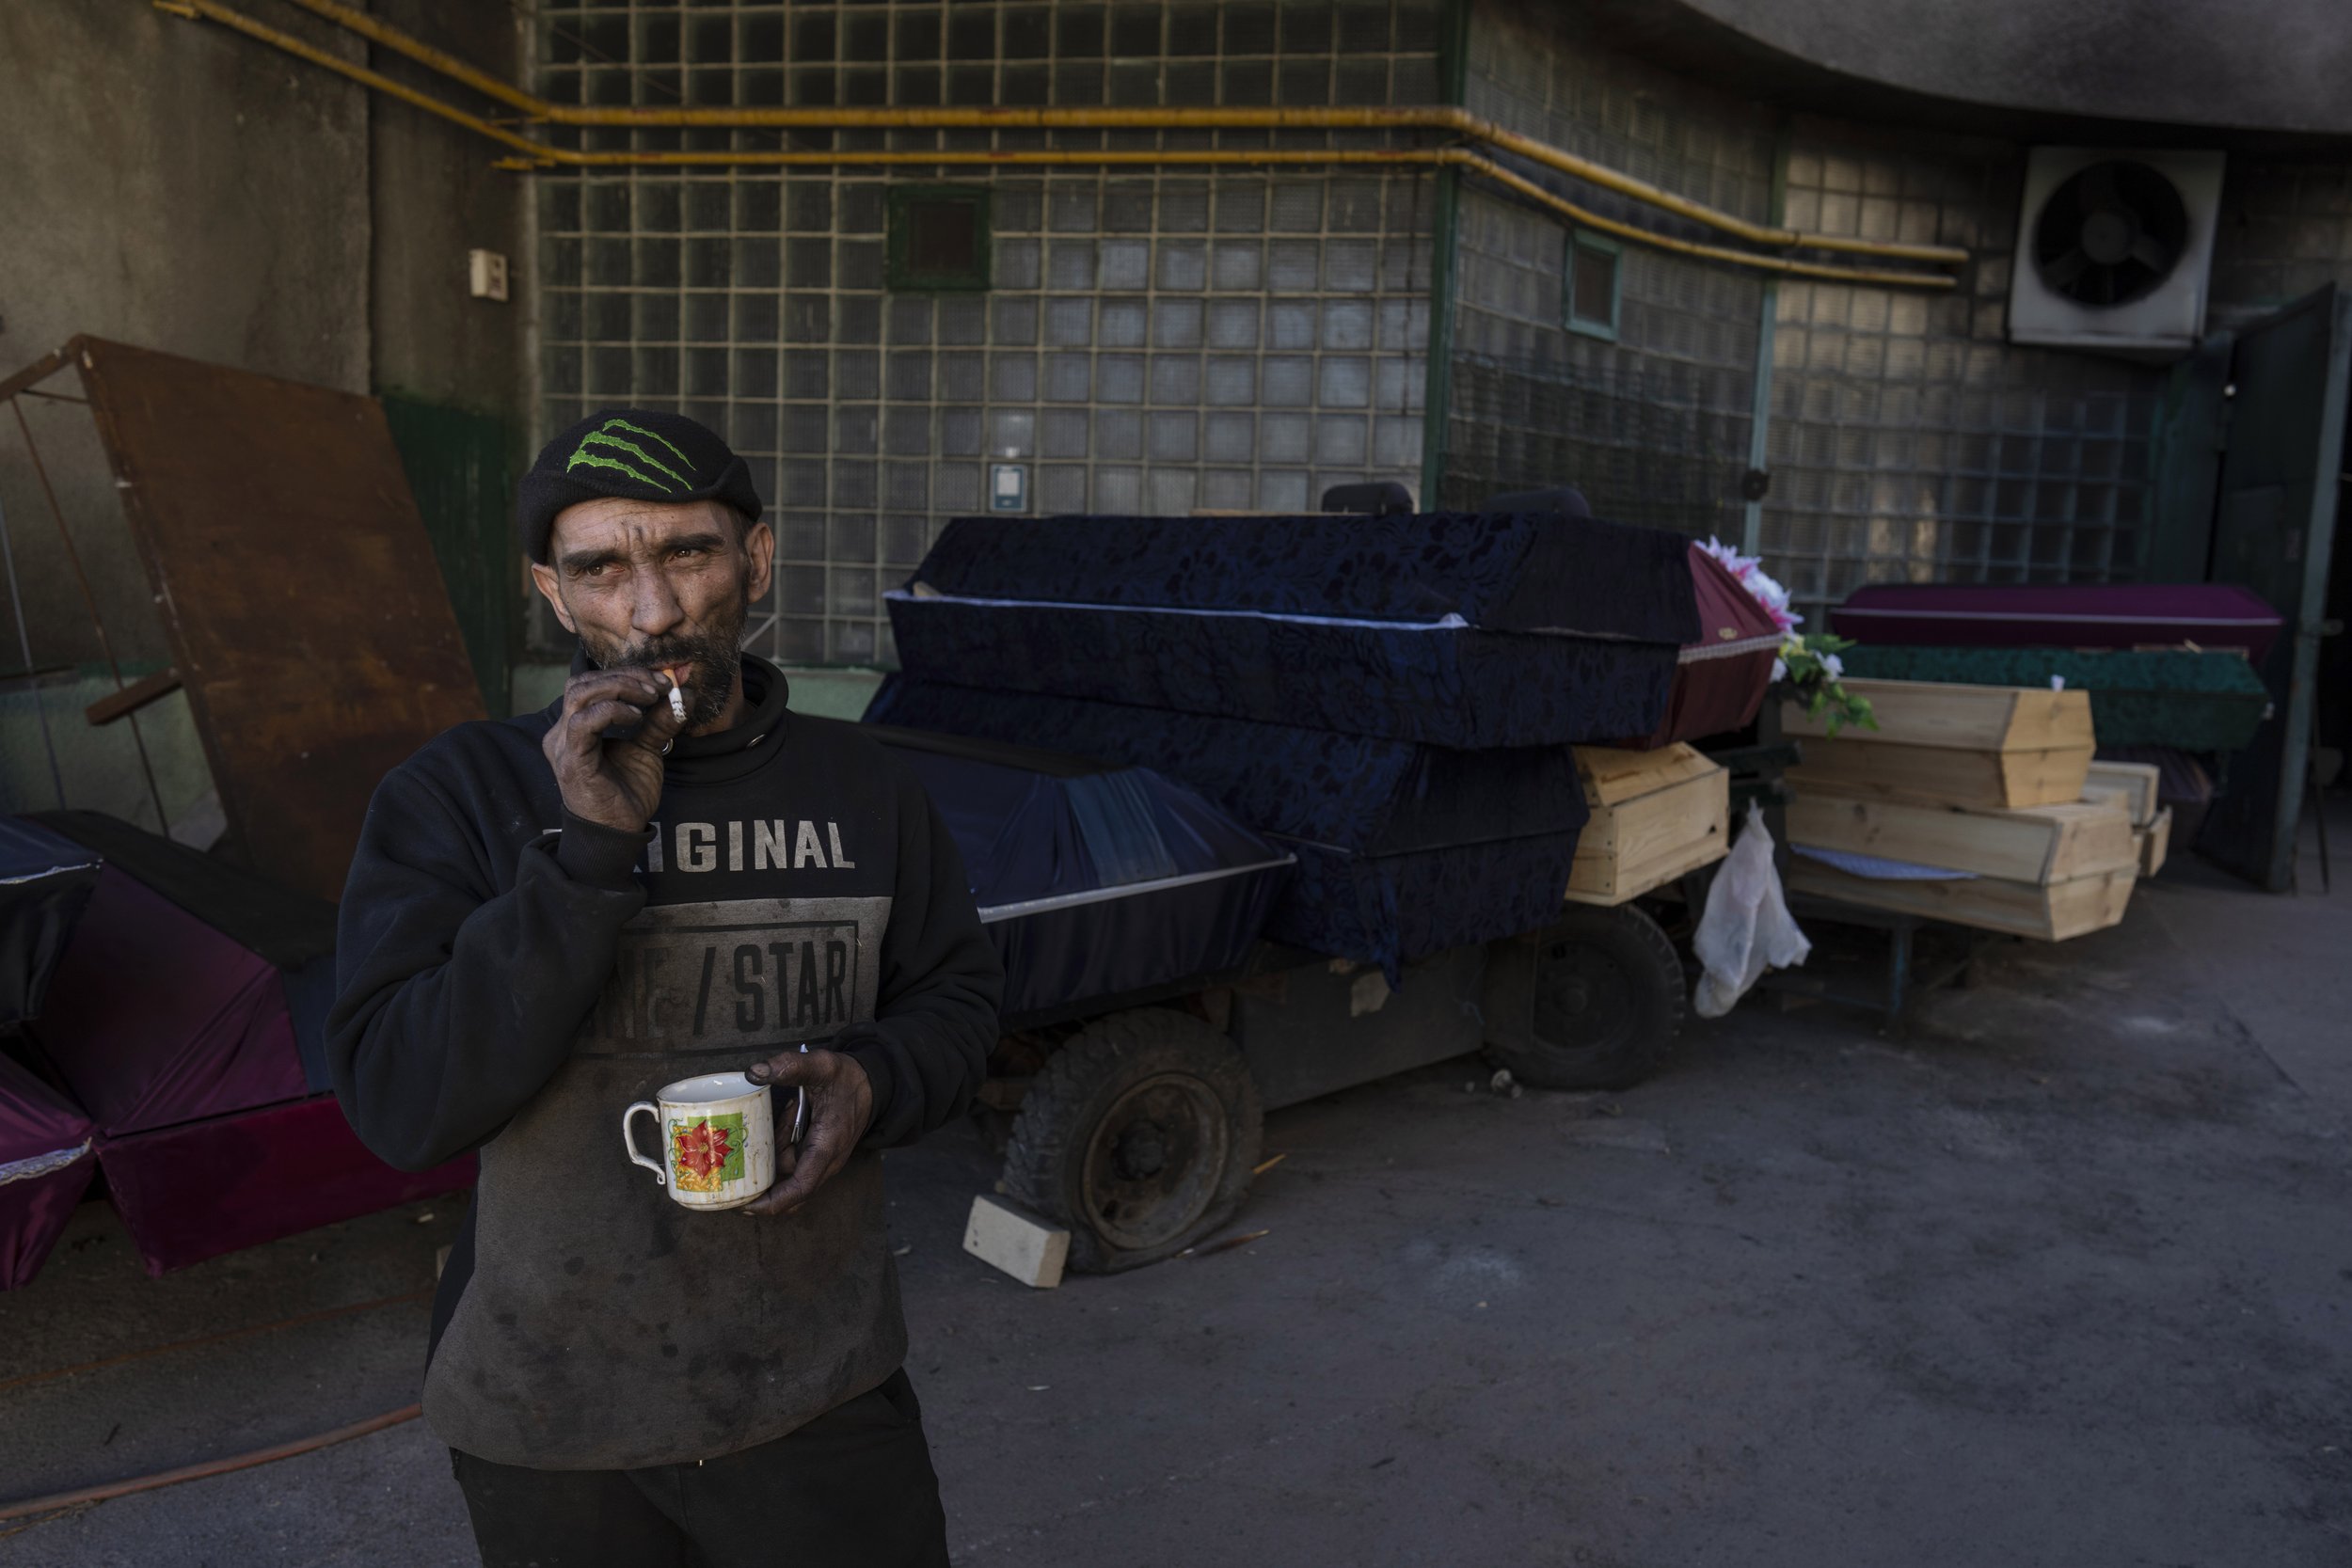  Worker Ruslan Trishchuk, 40, smokes a cigarette while taking a break outside the crematorium of Baikave cemetery in Kyiv, Ukraine, Monday, March 21, 2022. (AP Photo/Rodrigo Abd) 